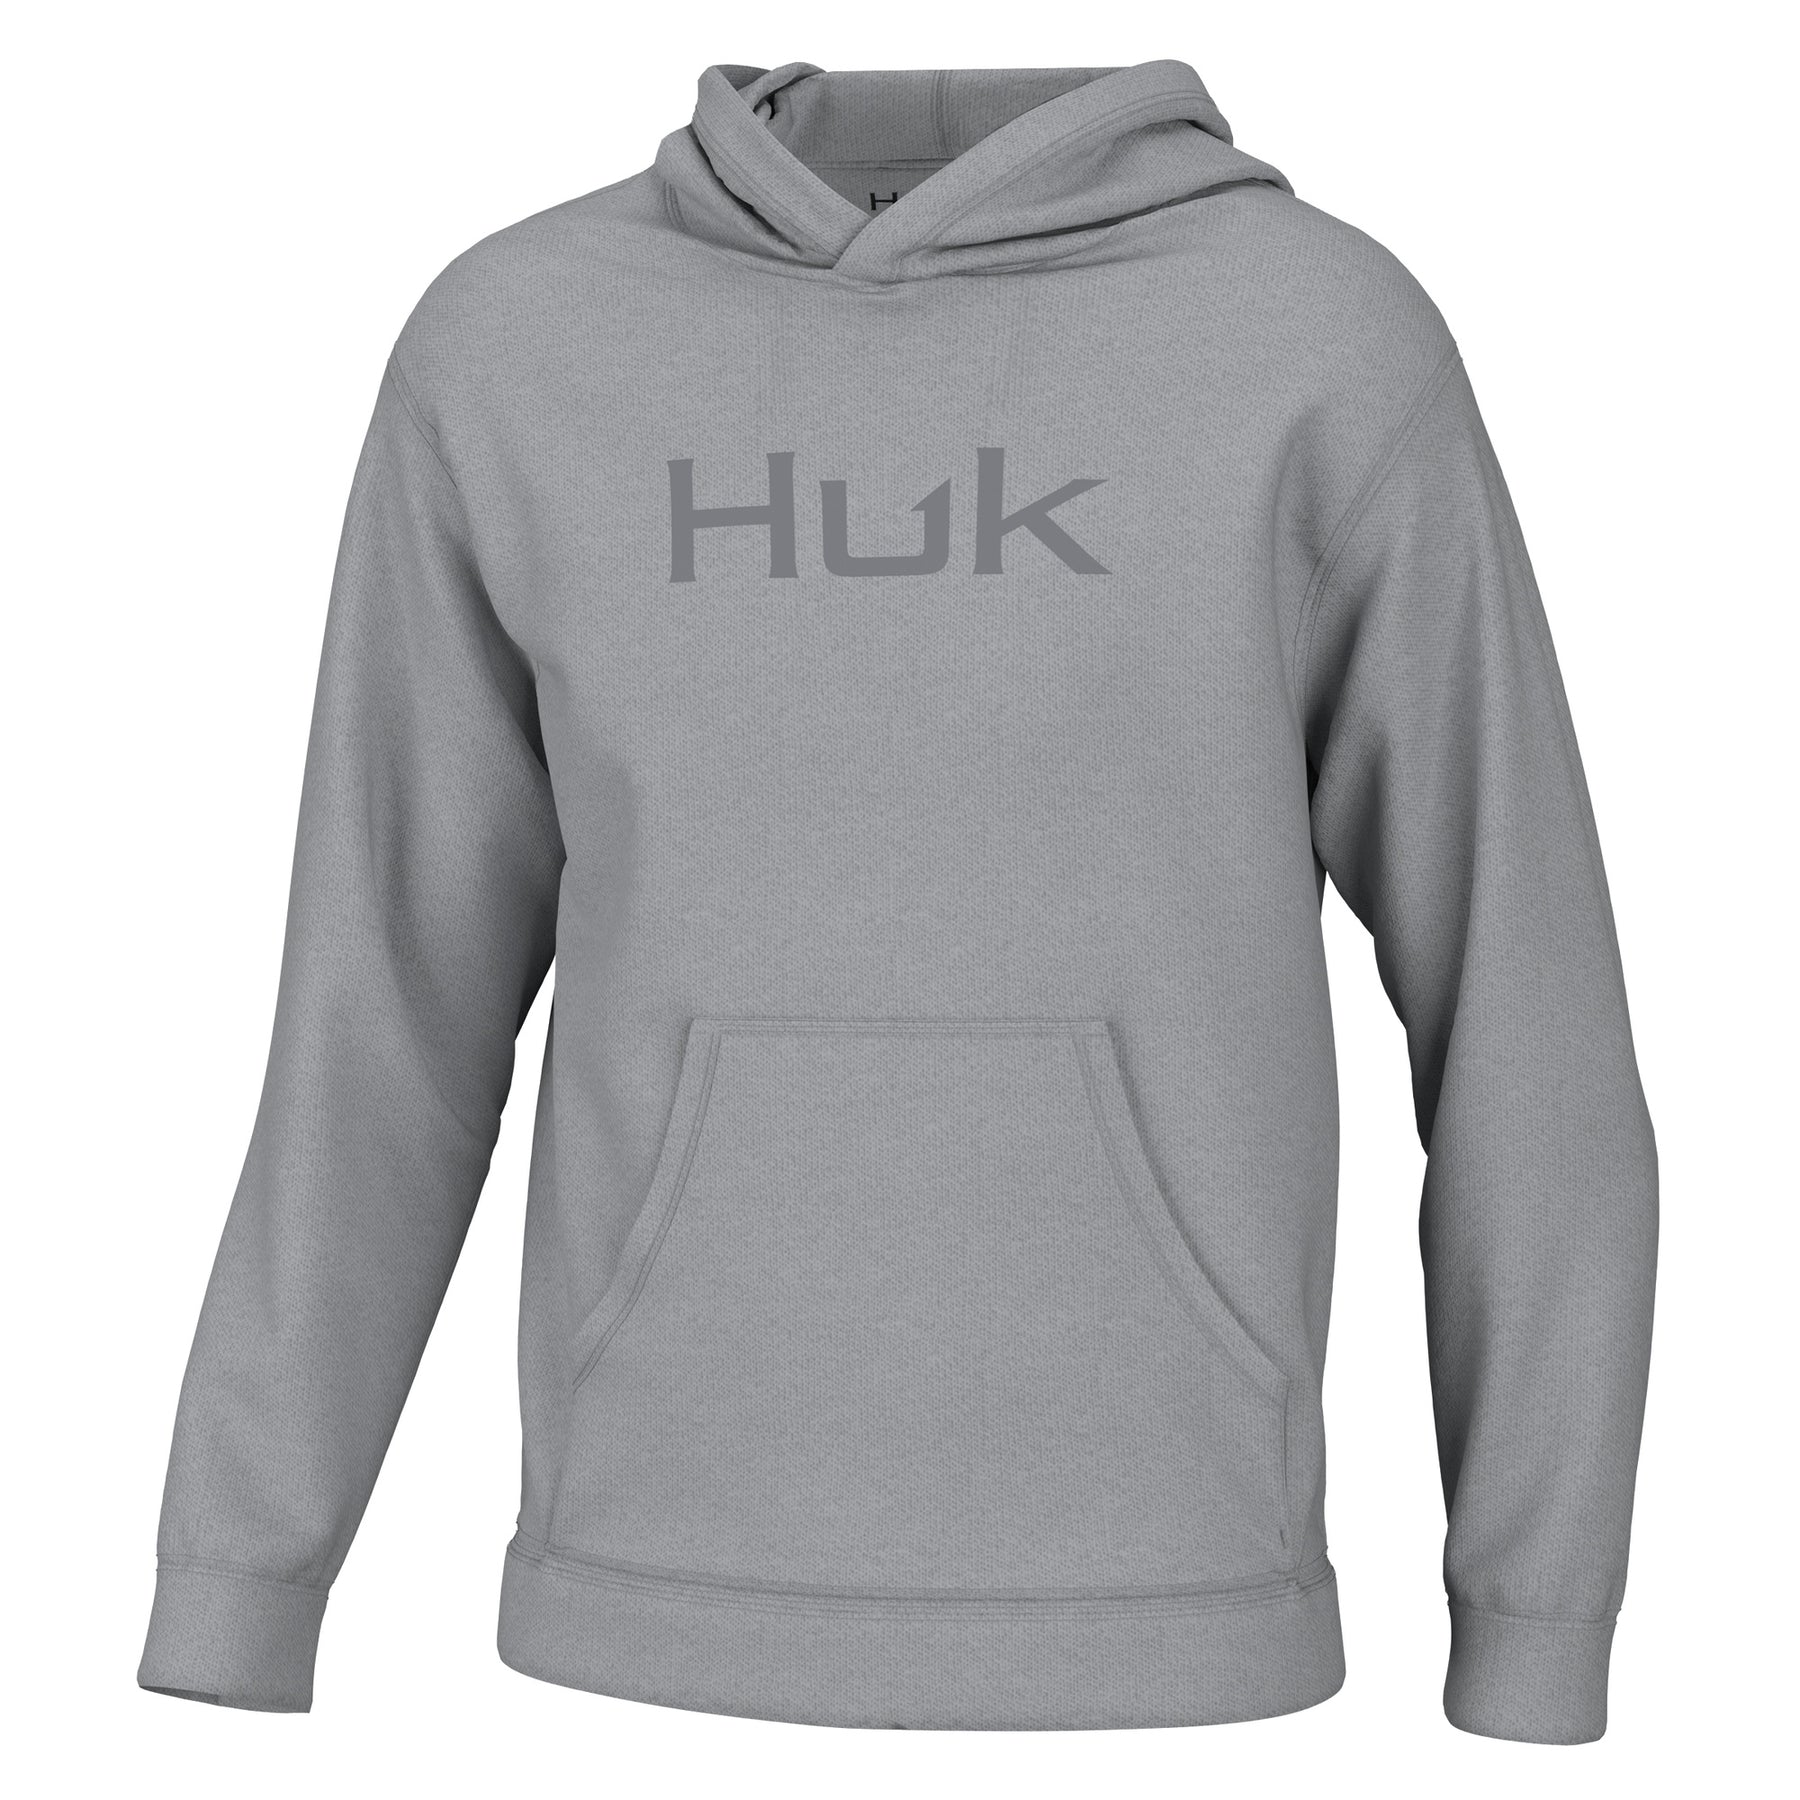 Huk Gear - Huk'D Up Performance Fleece Hoodie - Military & First Responder  Discounts